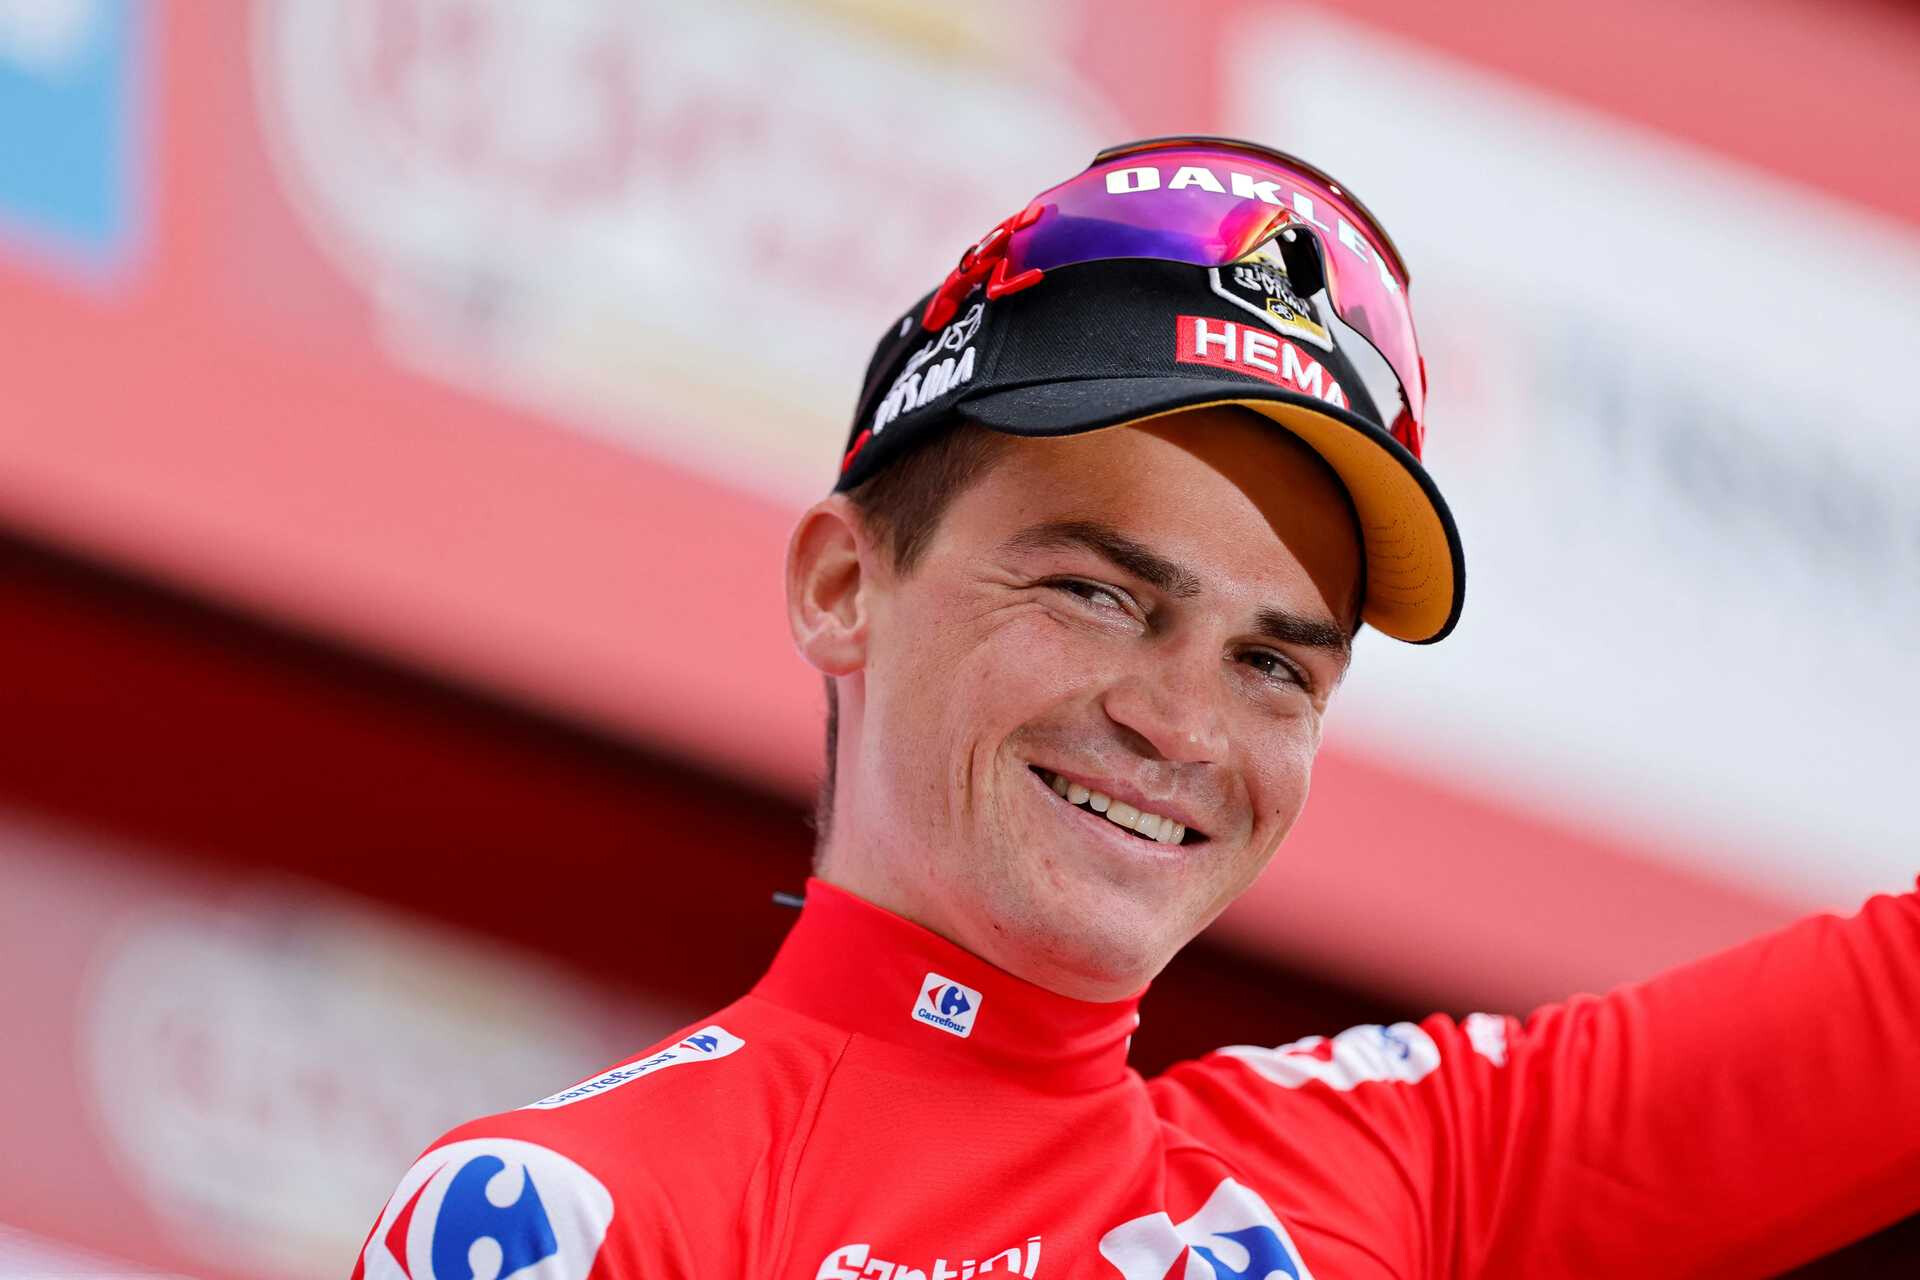 Consagración a Sepp Kuss al finalizar la Vuelta a España